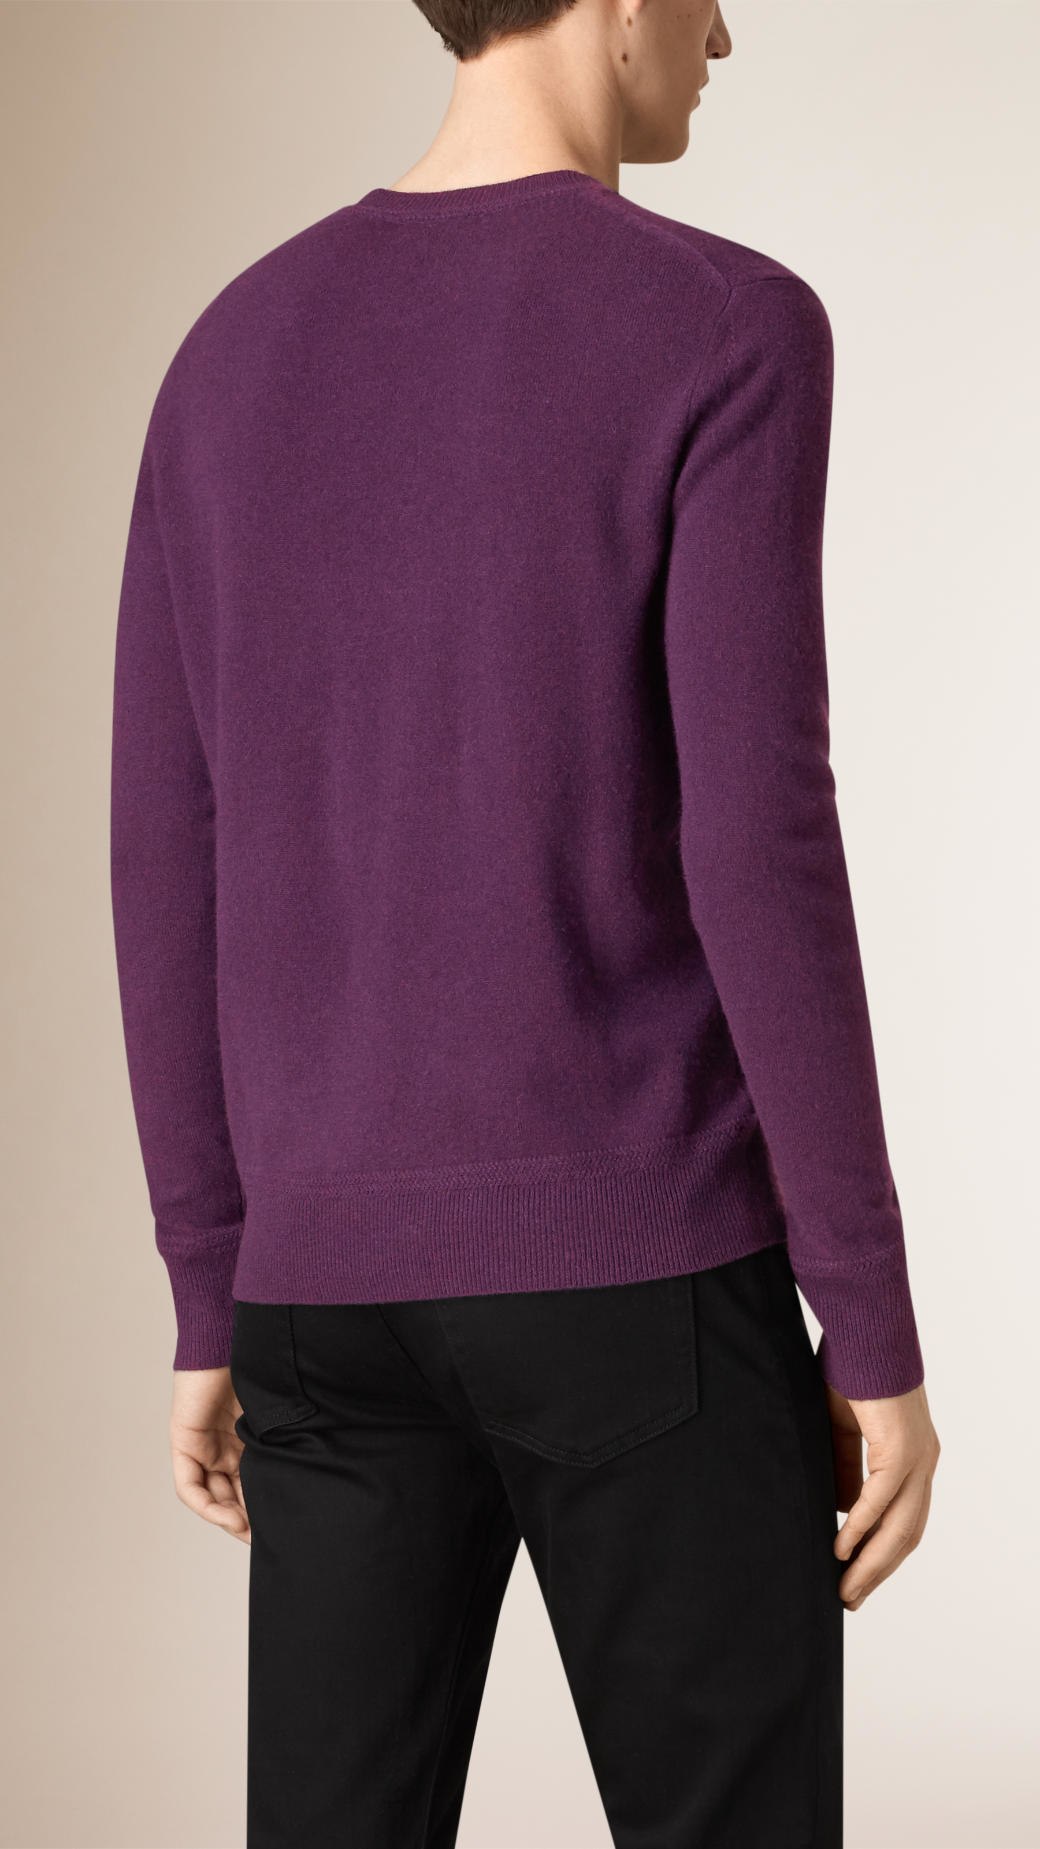 Lyst - Burberry Crew Neck Cashmere Sweater Regency Purple in Purple for Men